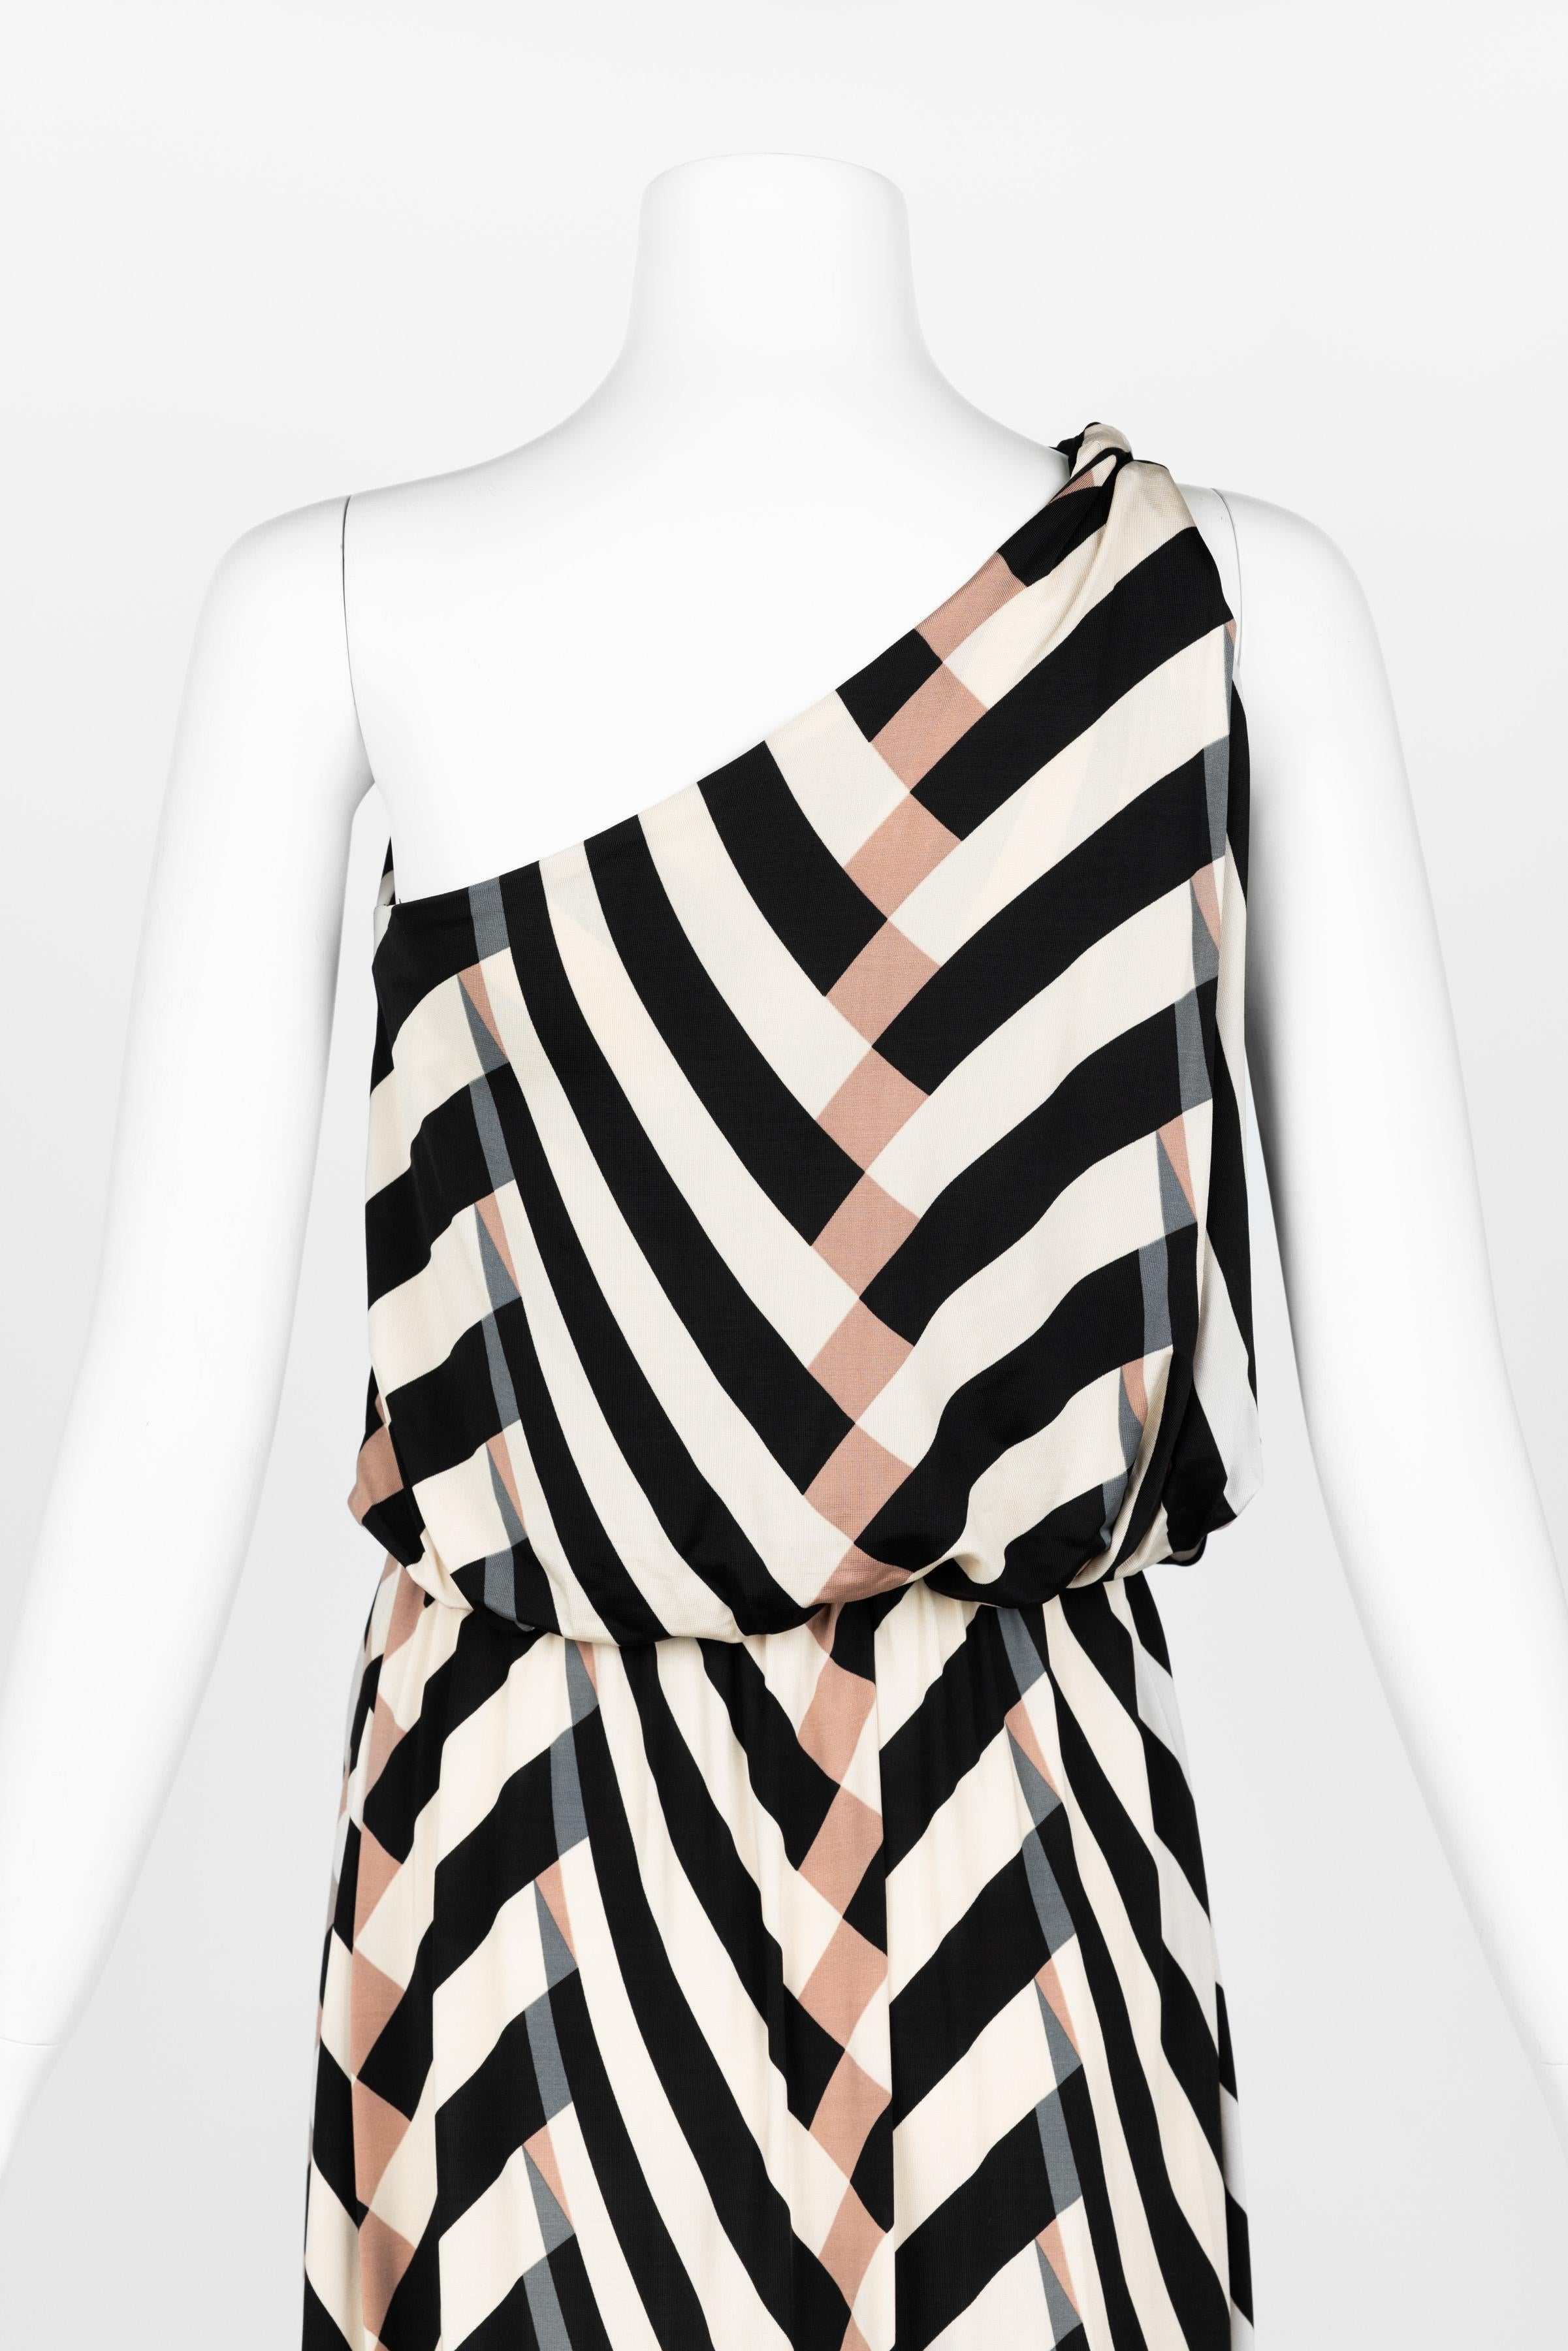 Lanvin  Alber Elbaz Spring 2015 One Shoulder Chevron Striped Jersey Dress For Sale 5